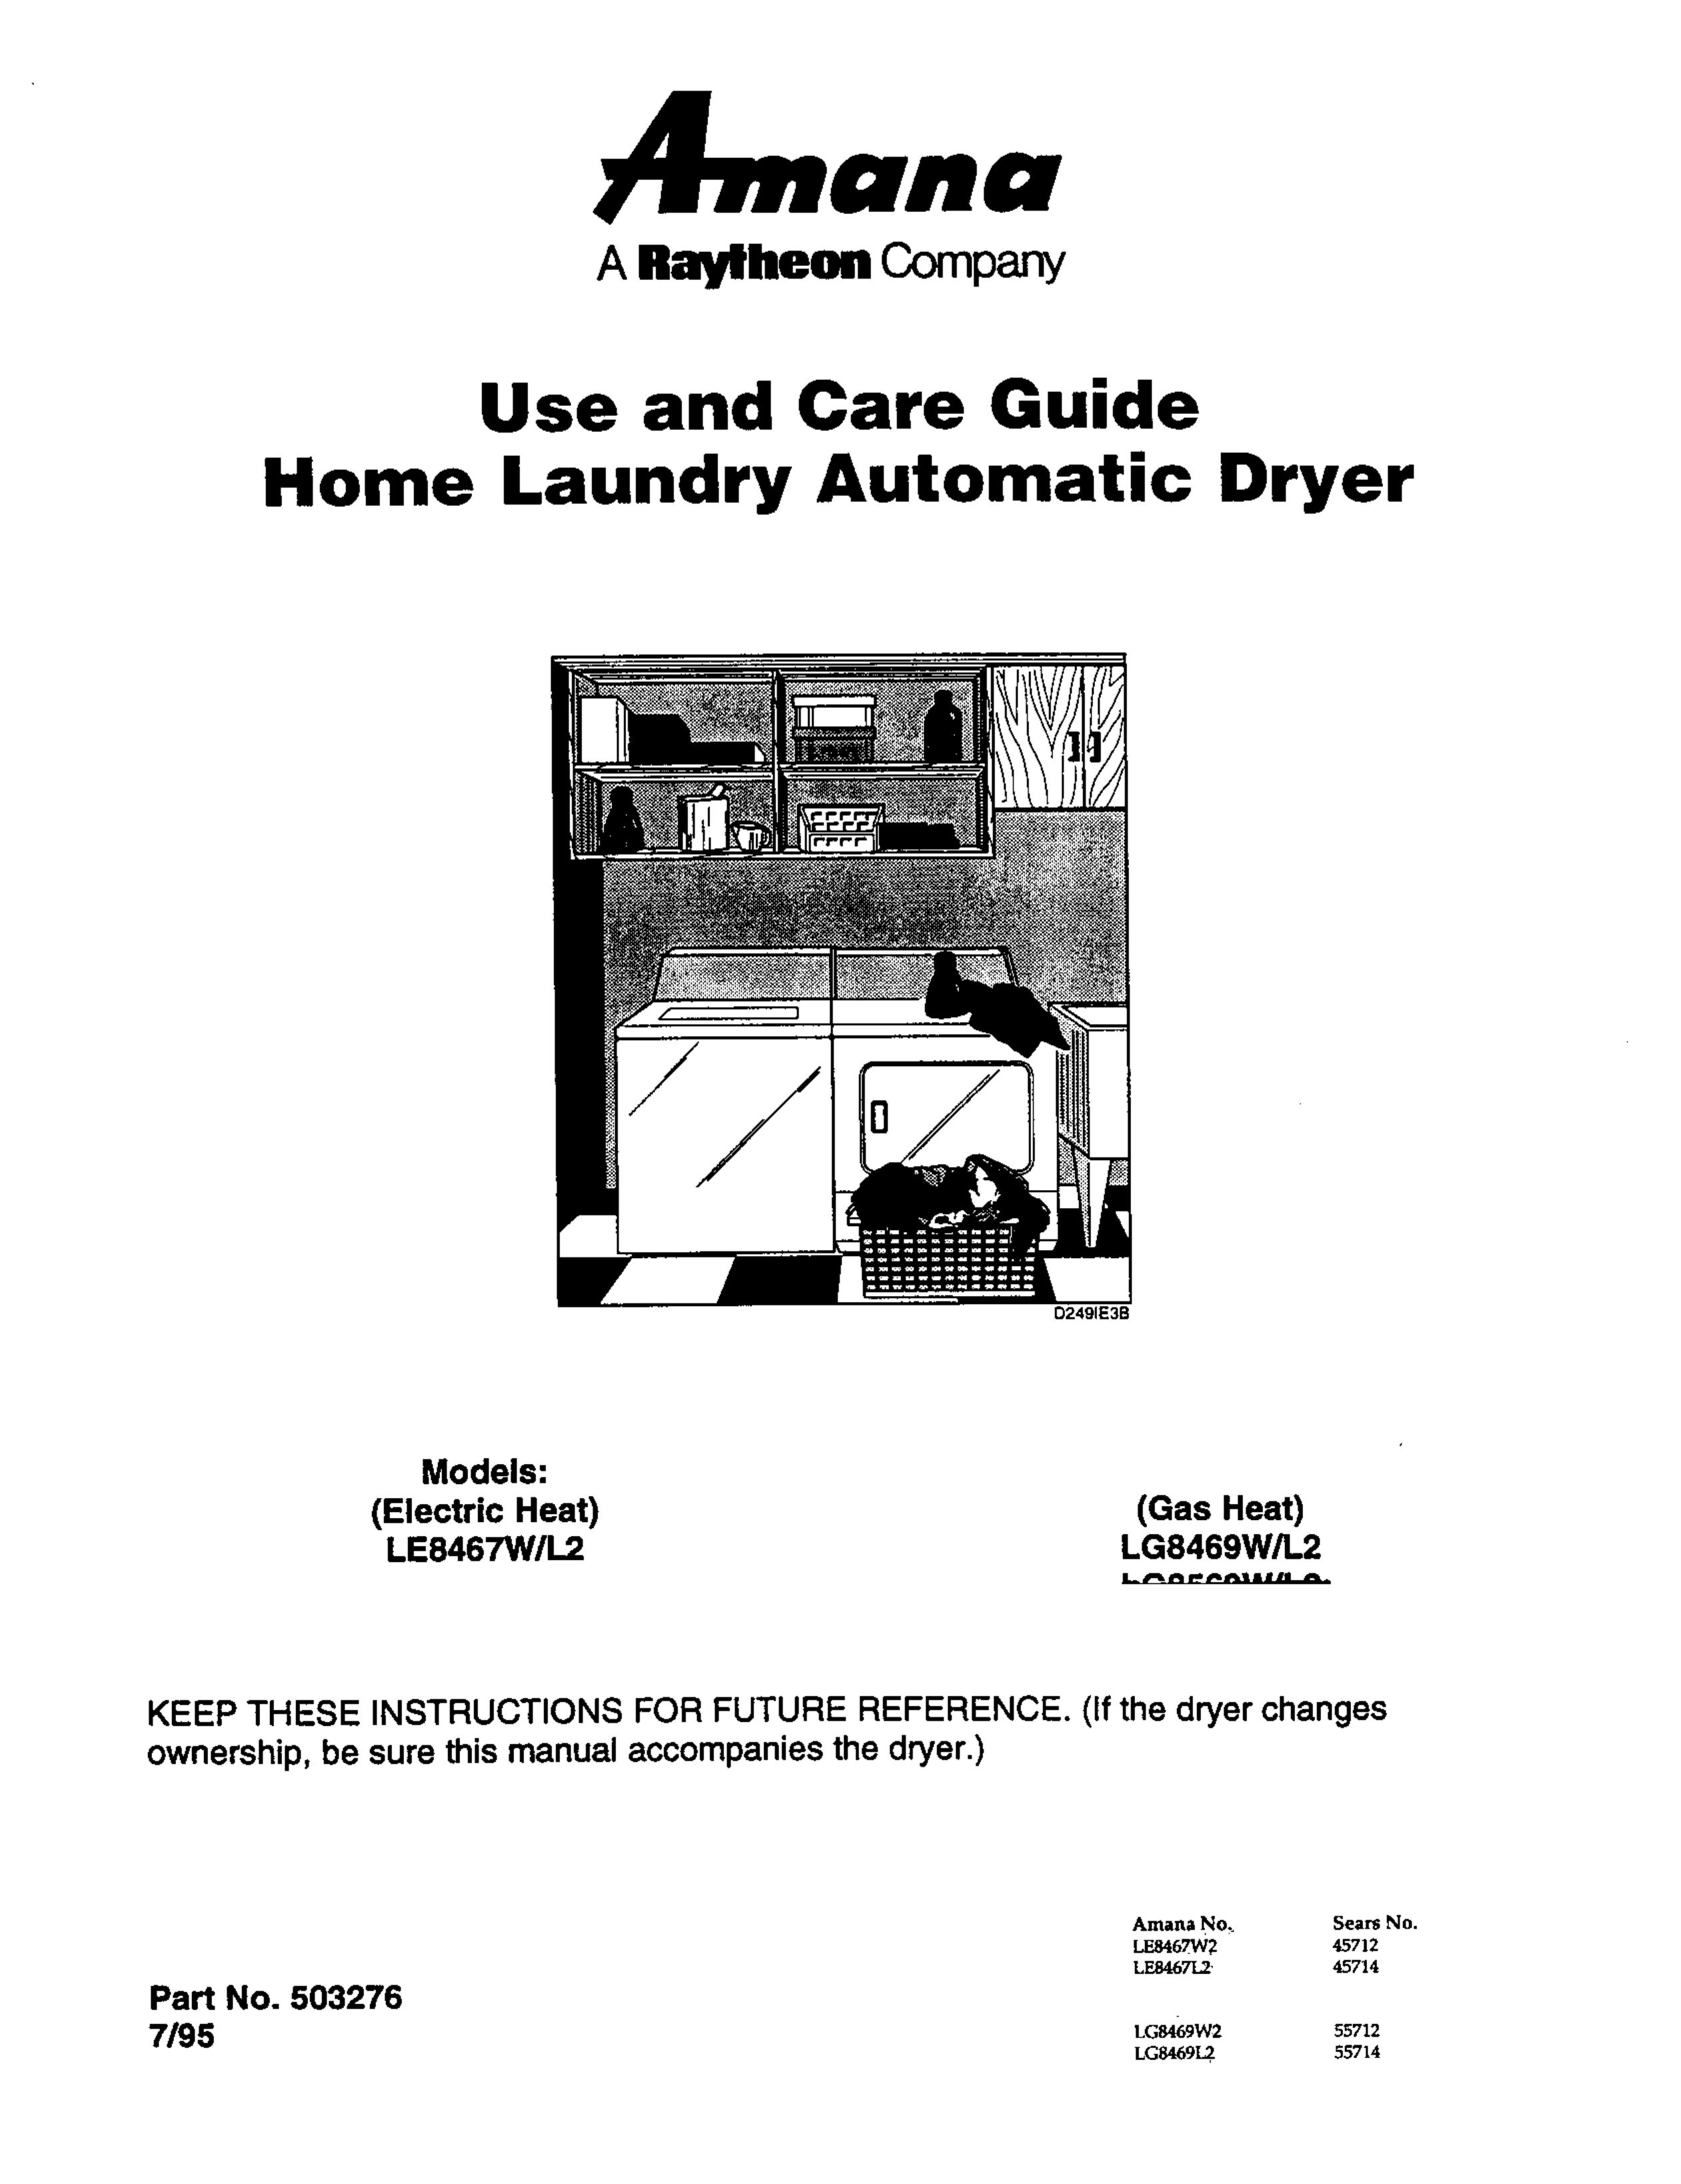 Amana LE8467W/L2 Clothes Dryer User Manual